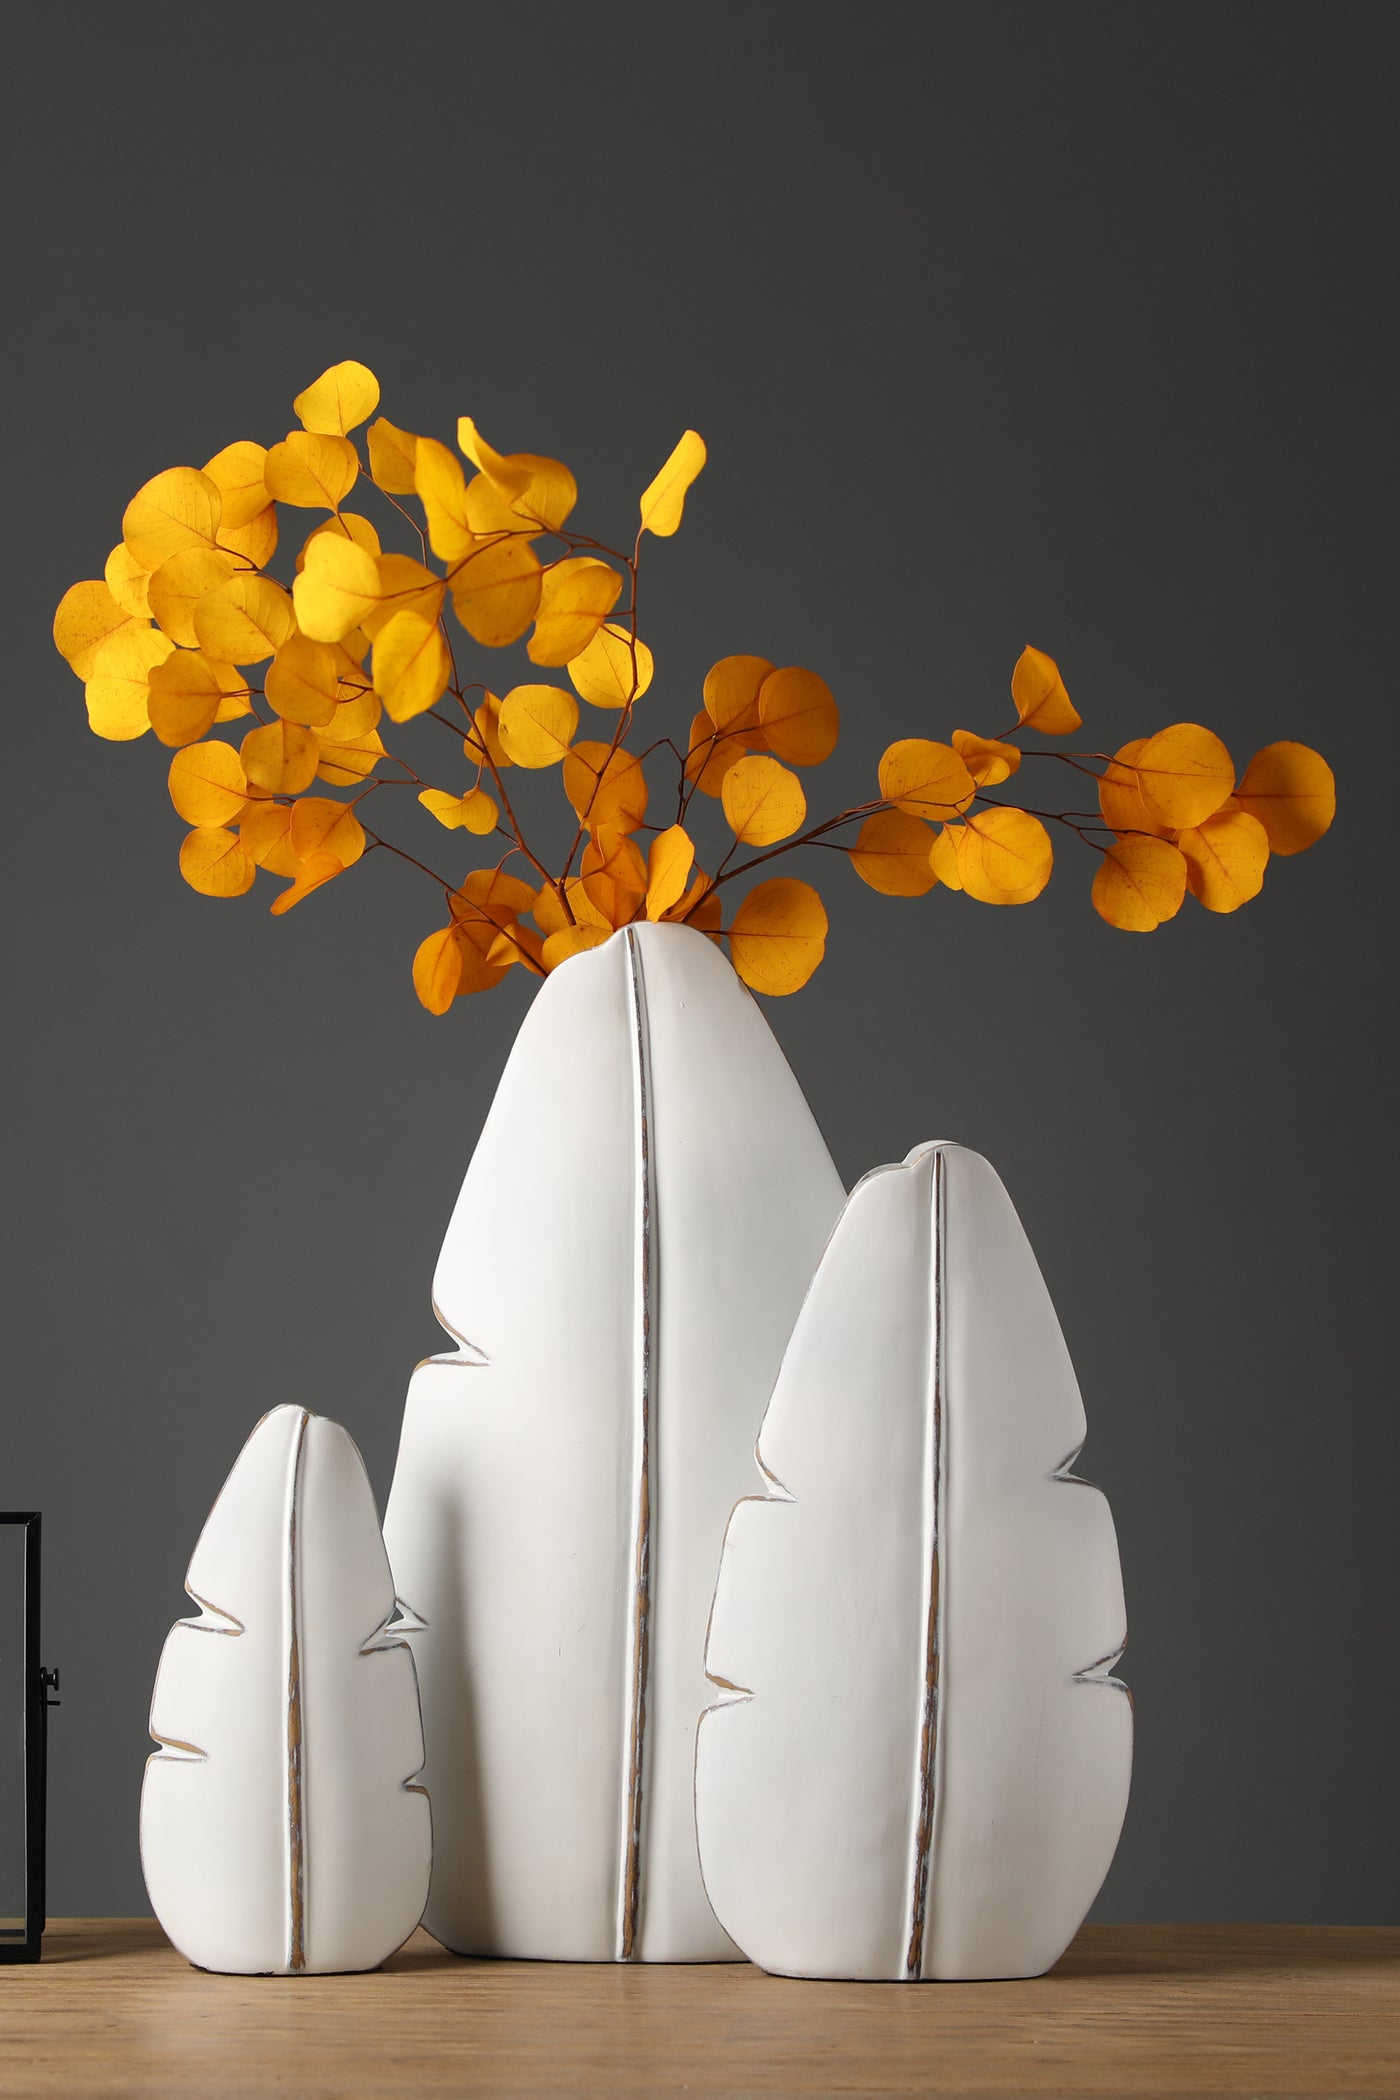 Leaf shape resin vase for your home or office decor